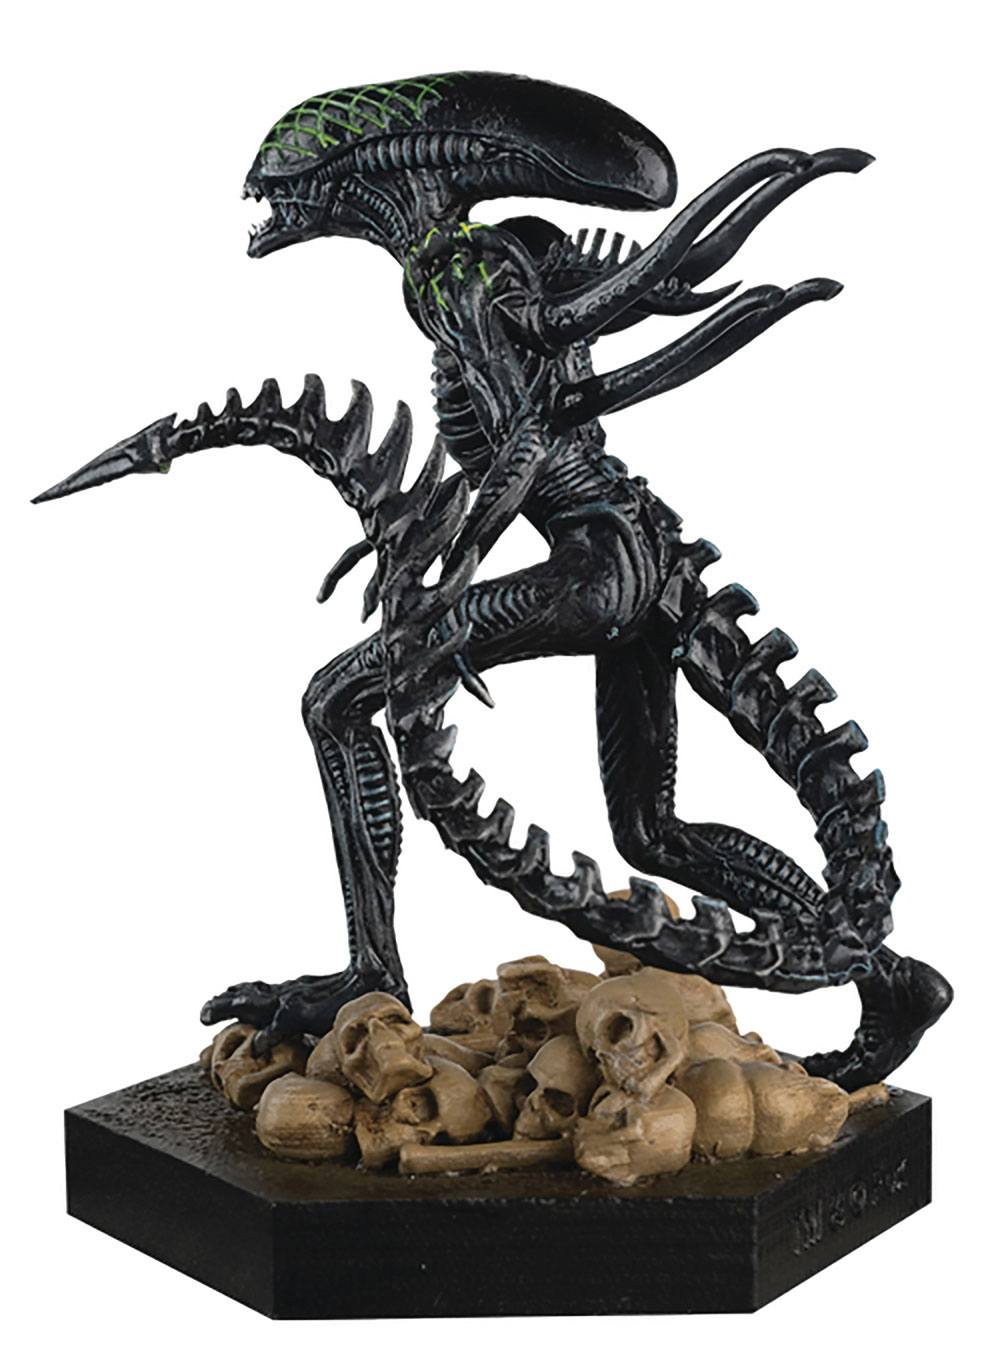 The Alien & Predator Figurine Collection Grid Xenomorph (Alien vs. Predator) 13 cm